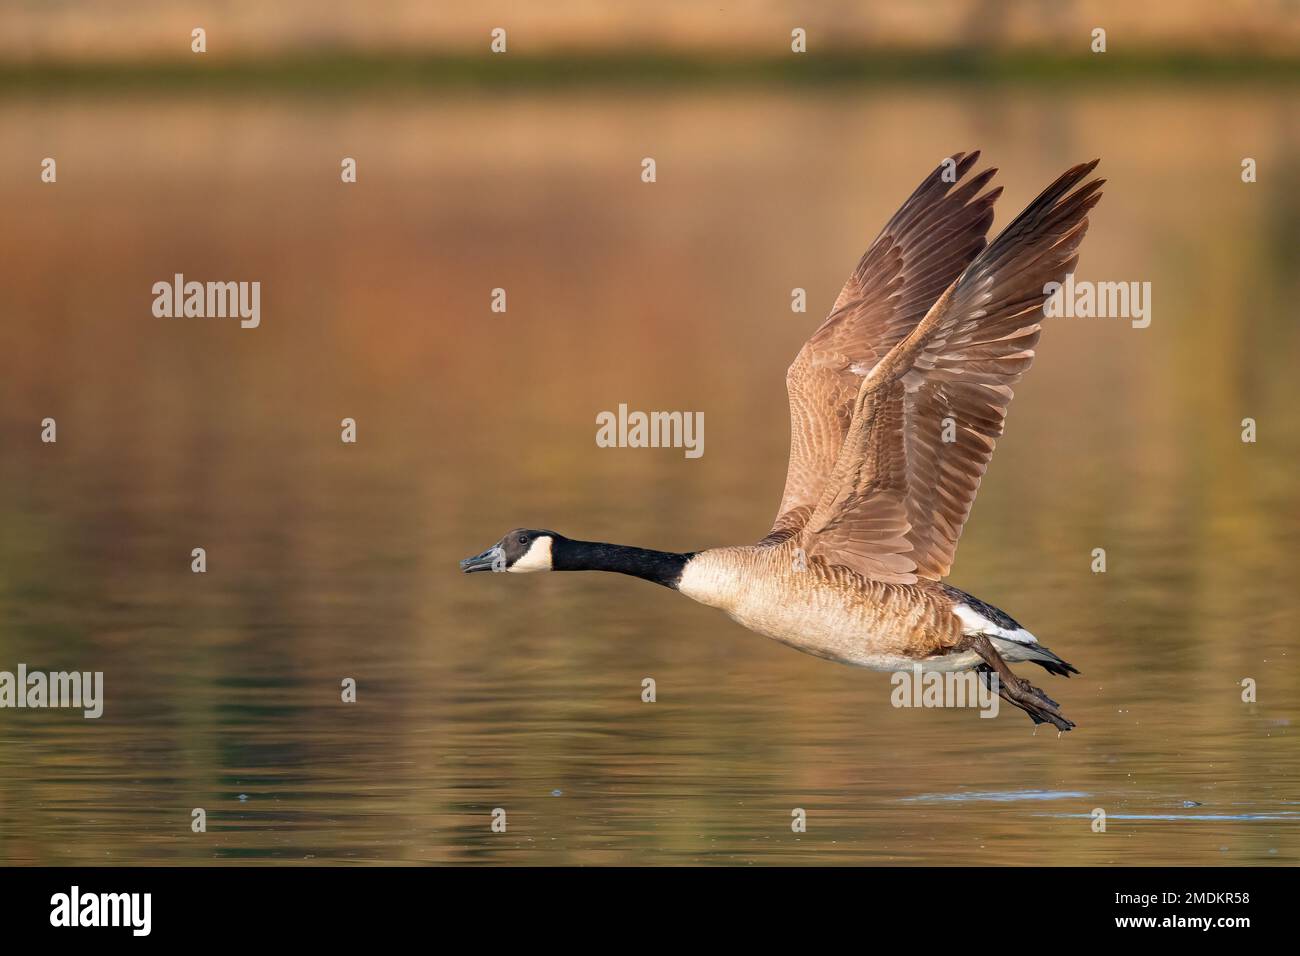 Canada goose (Branta canadensis), in flight over water, Germany Stock Photo